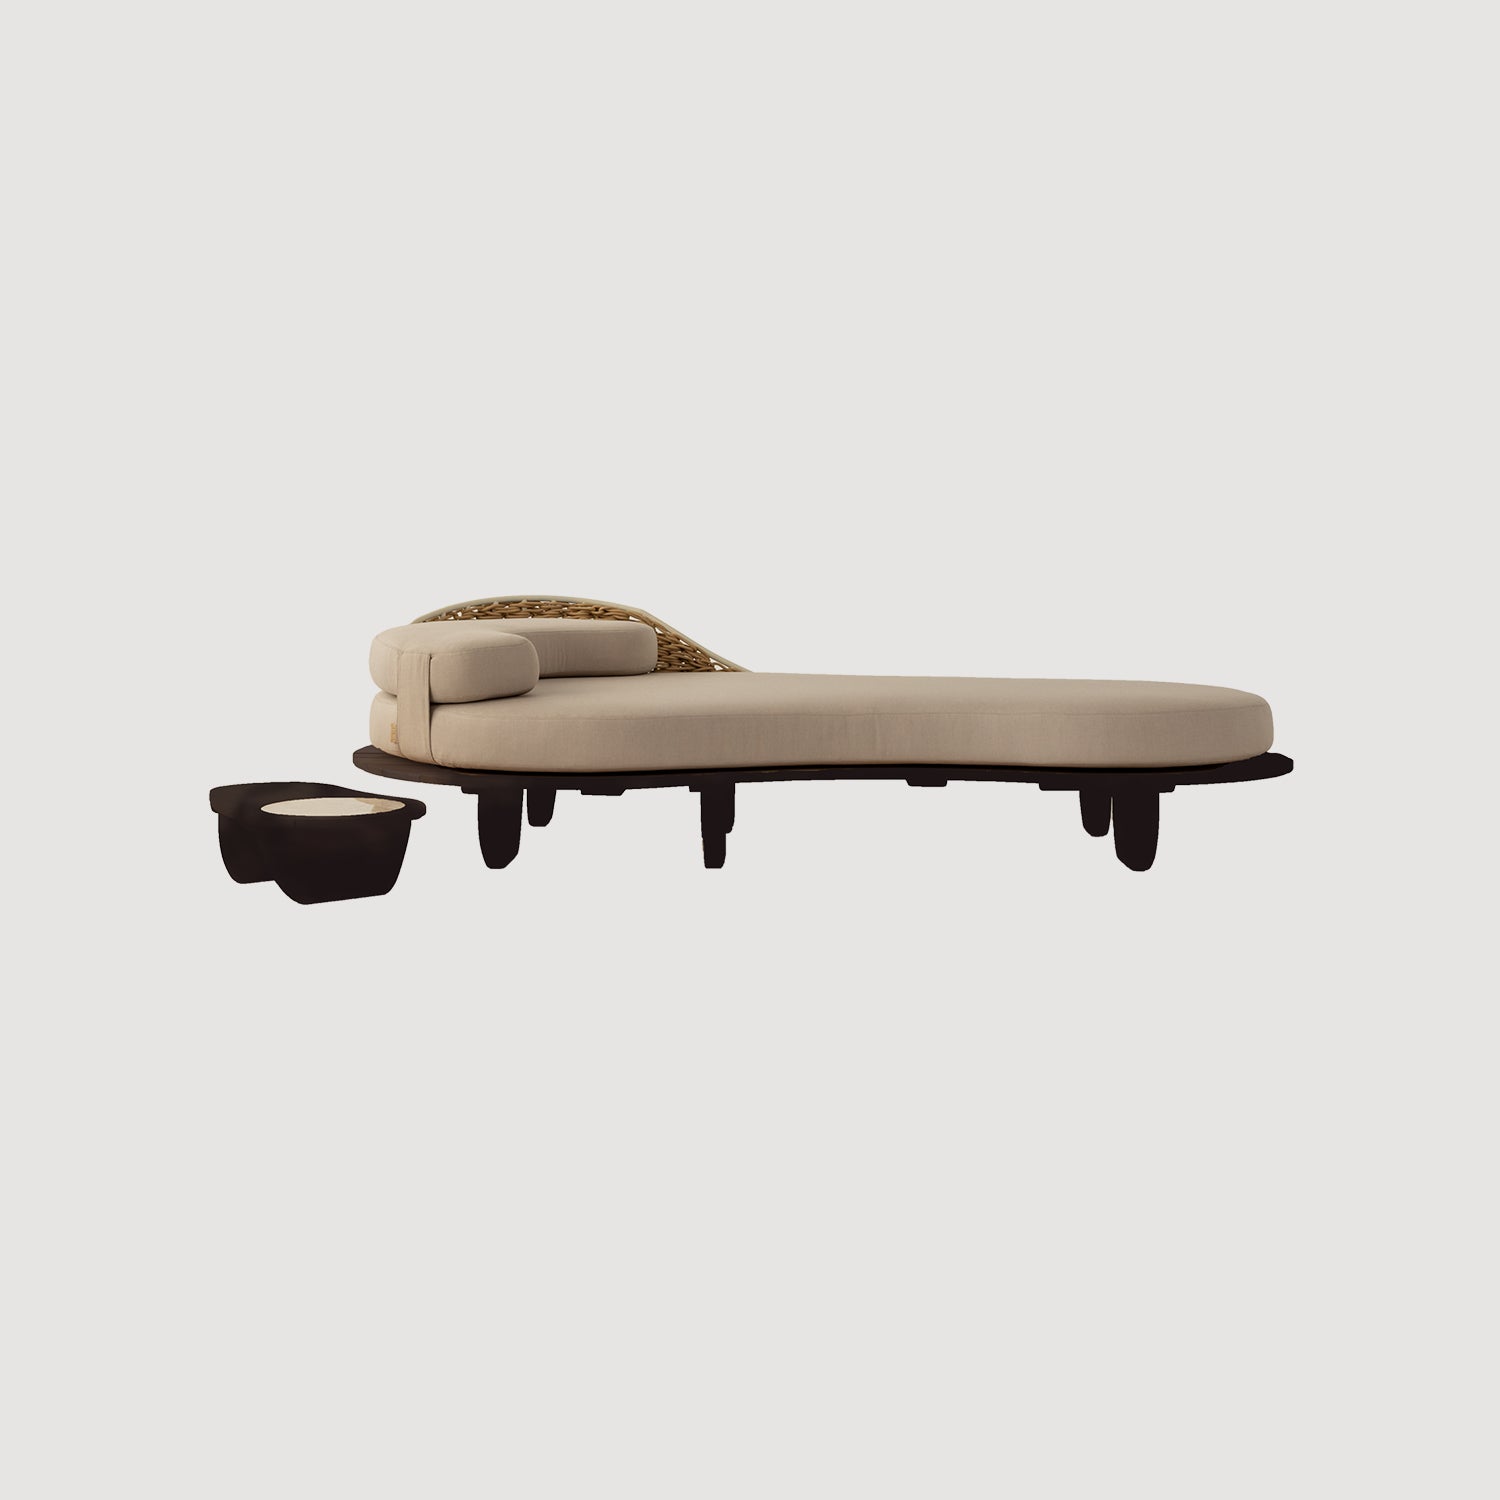 The Sayari Indoor / Outdoor Daybed Chaise and Table Kollektion von Studio Lloyd im Angebot